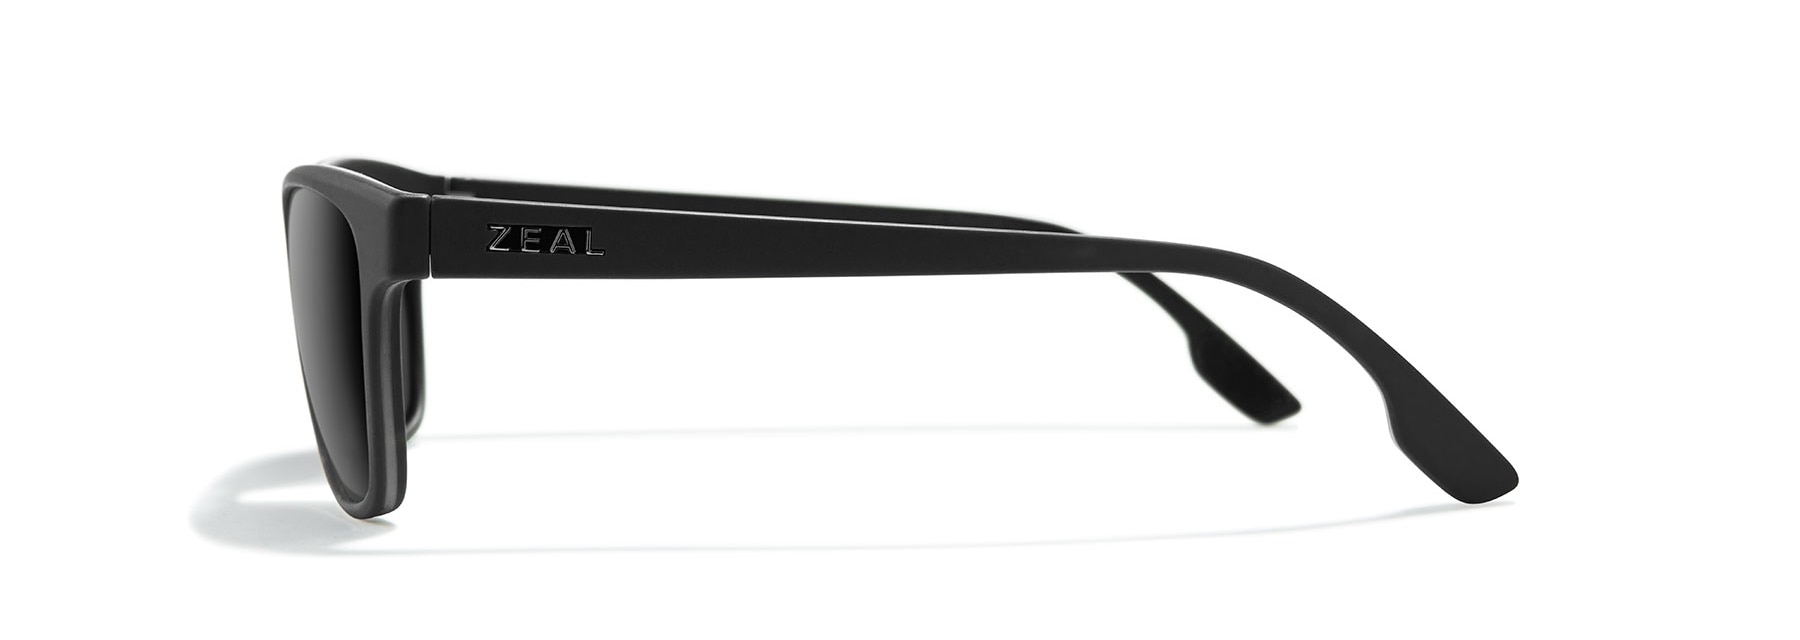 Shop AVON (Z1846) Sunglasses by Zeal | Zeal Optics